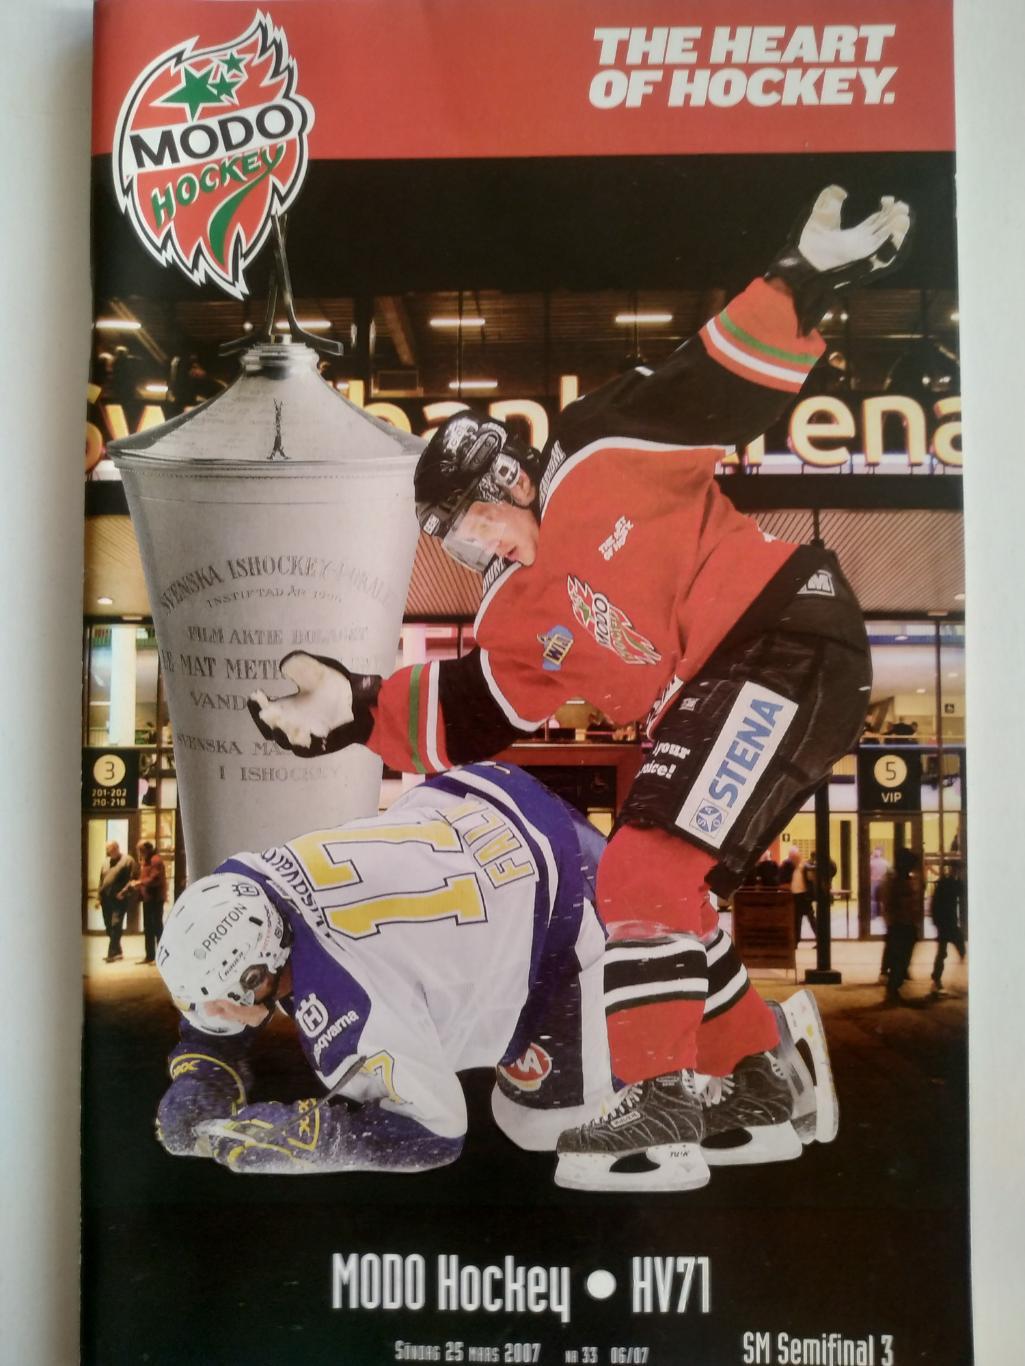 ХОККЕЙ ПРОГРАММА МАТЧА НХЛ NHL 2007 MAR.25 MODO HOCKEY VS. HV 71 PROGRAM GAME